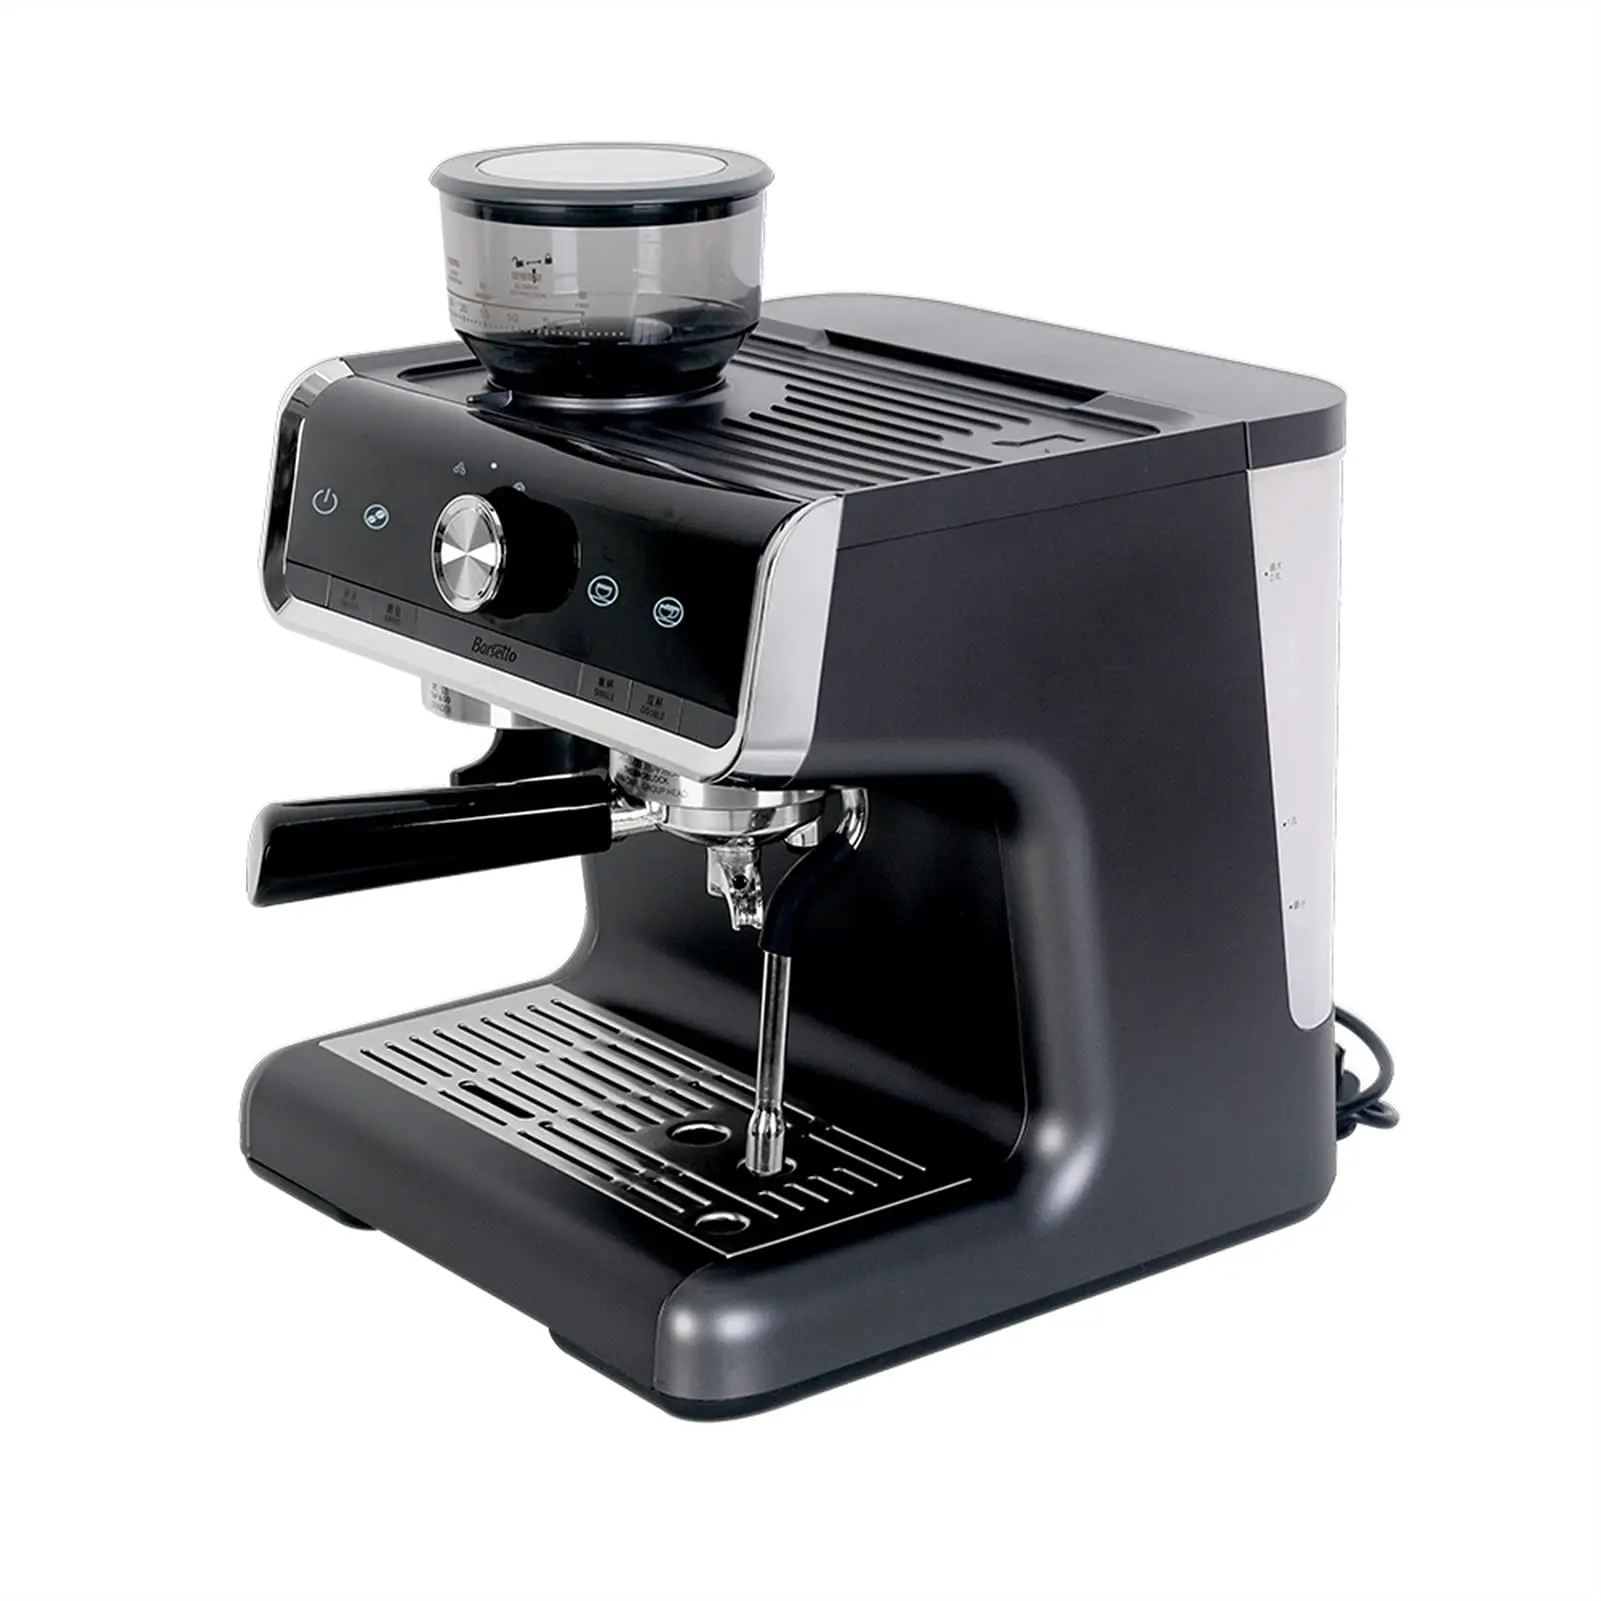 comprar maquina de cafe profesional - Cuánto consume una cafetera profesional